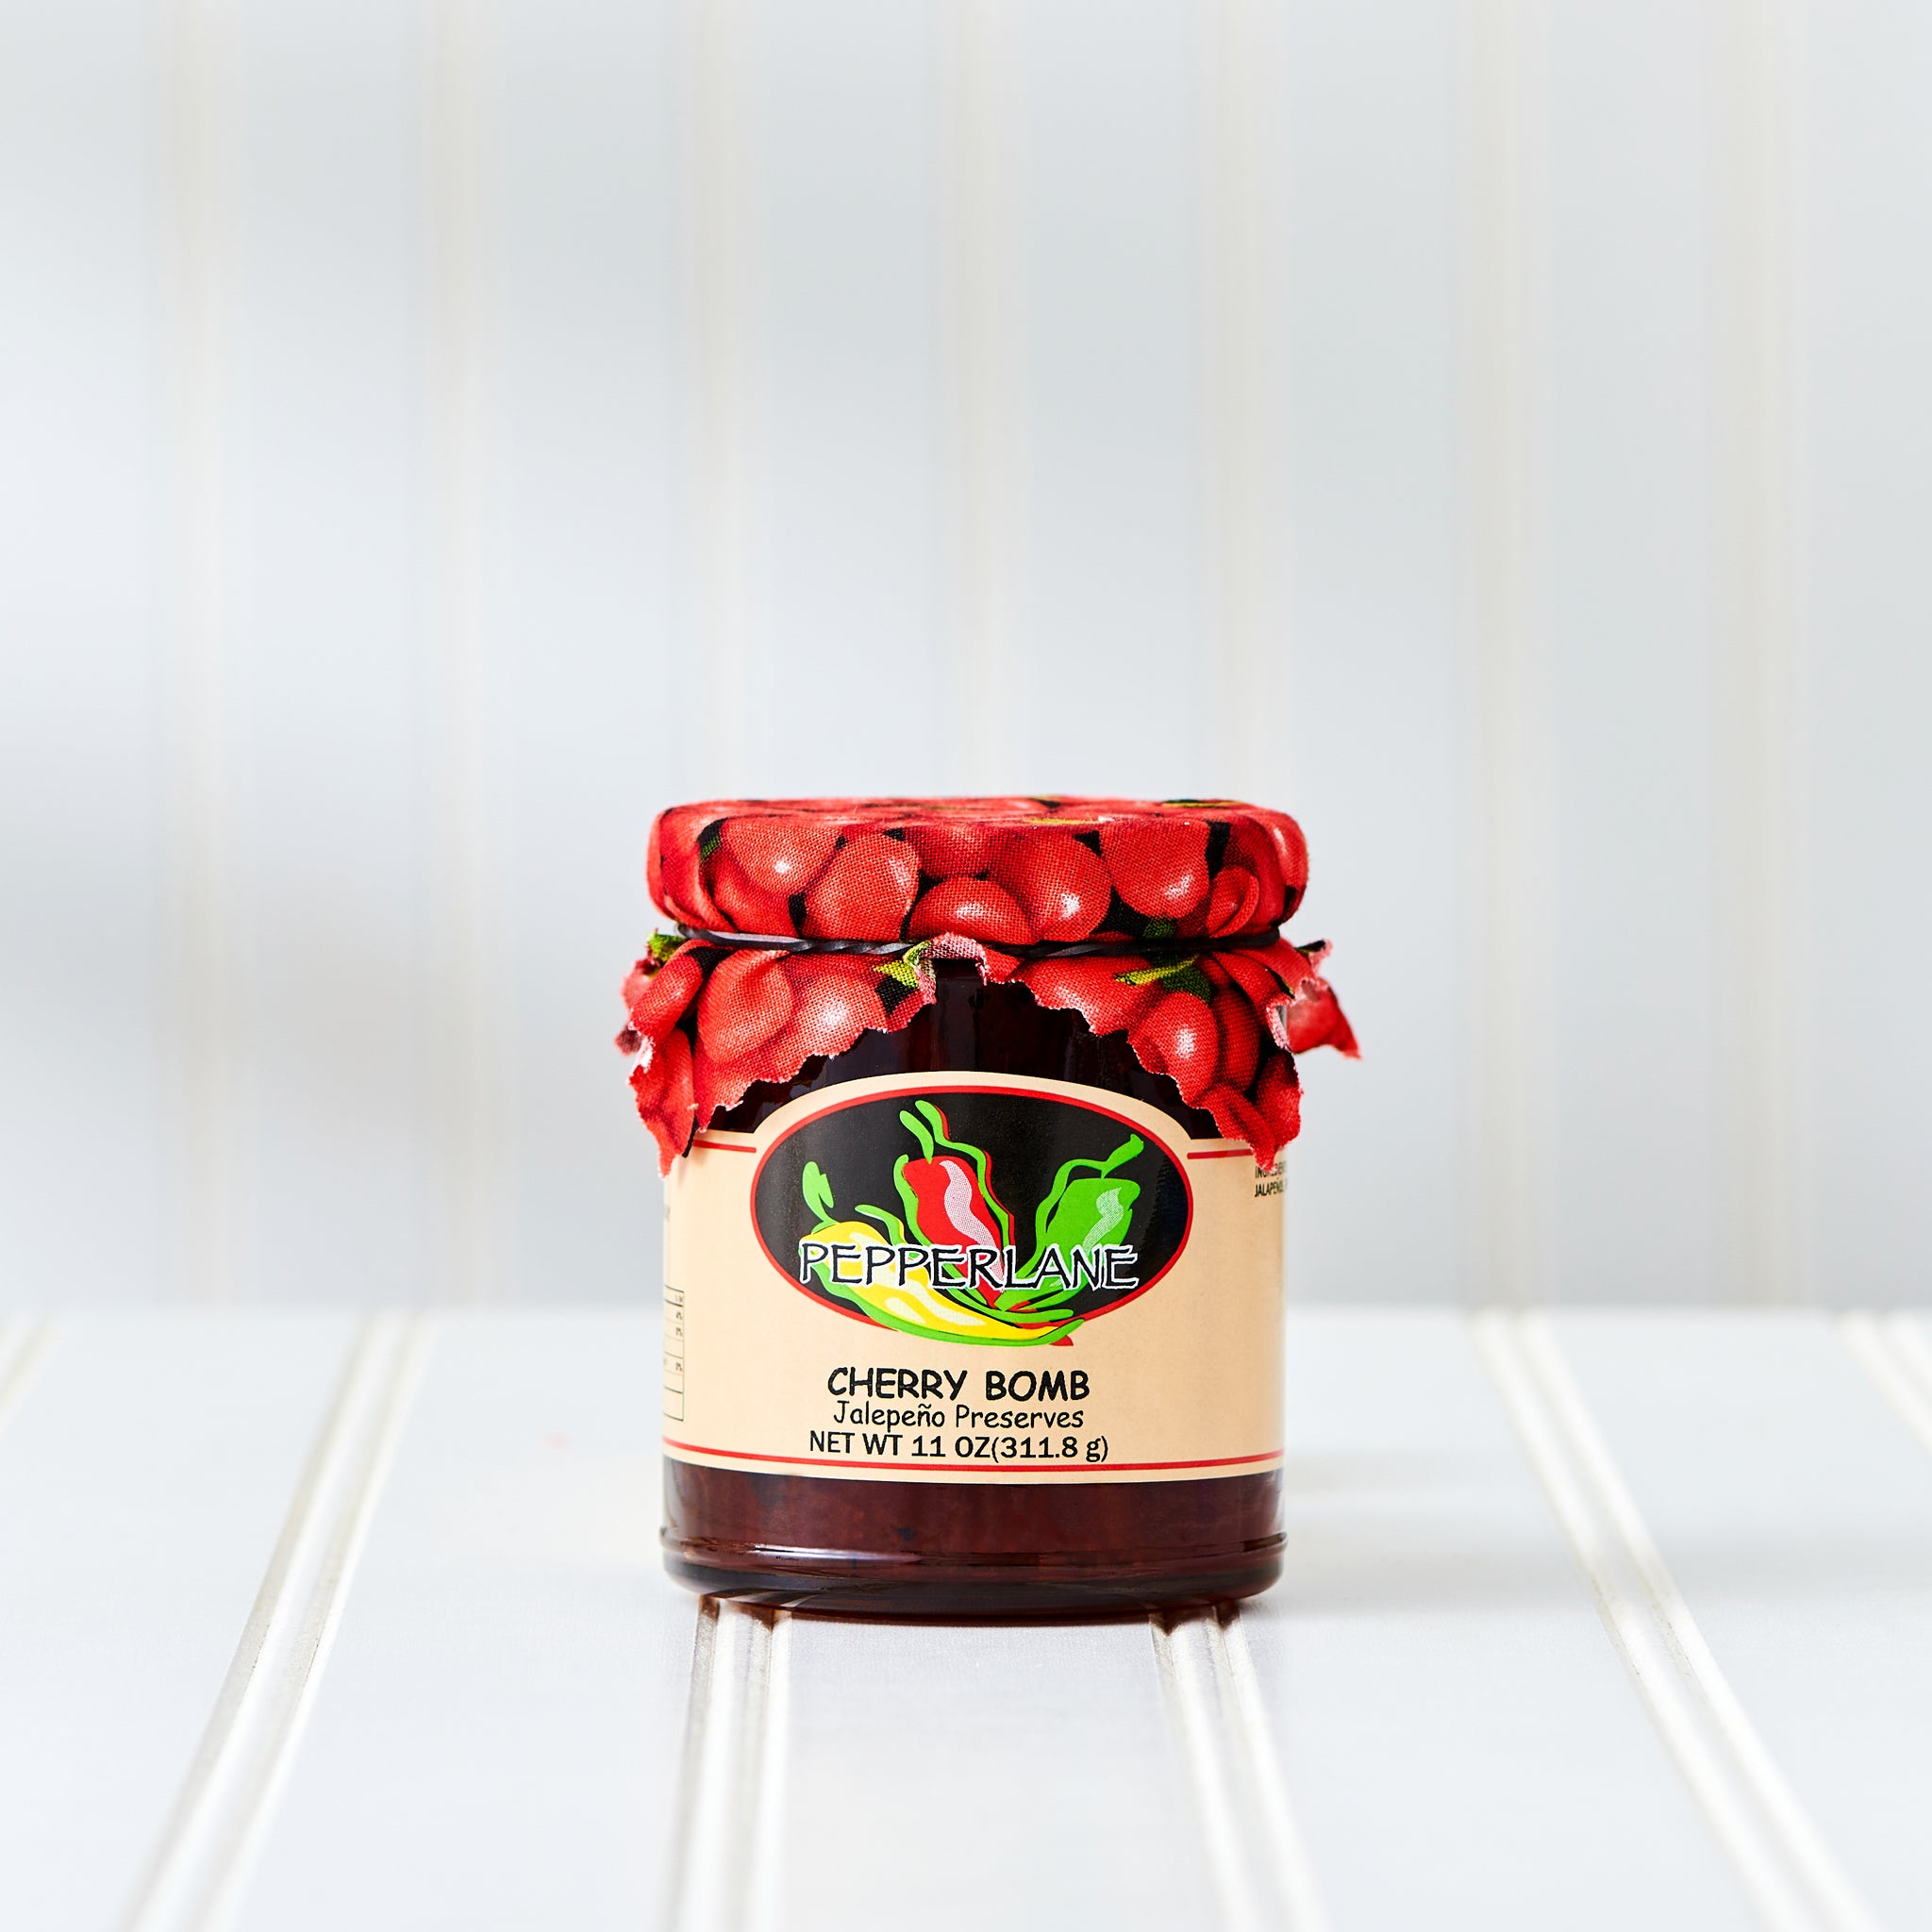 Pepperlane Cherry Bomb Jalapeño Preserves